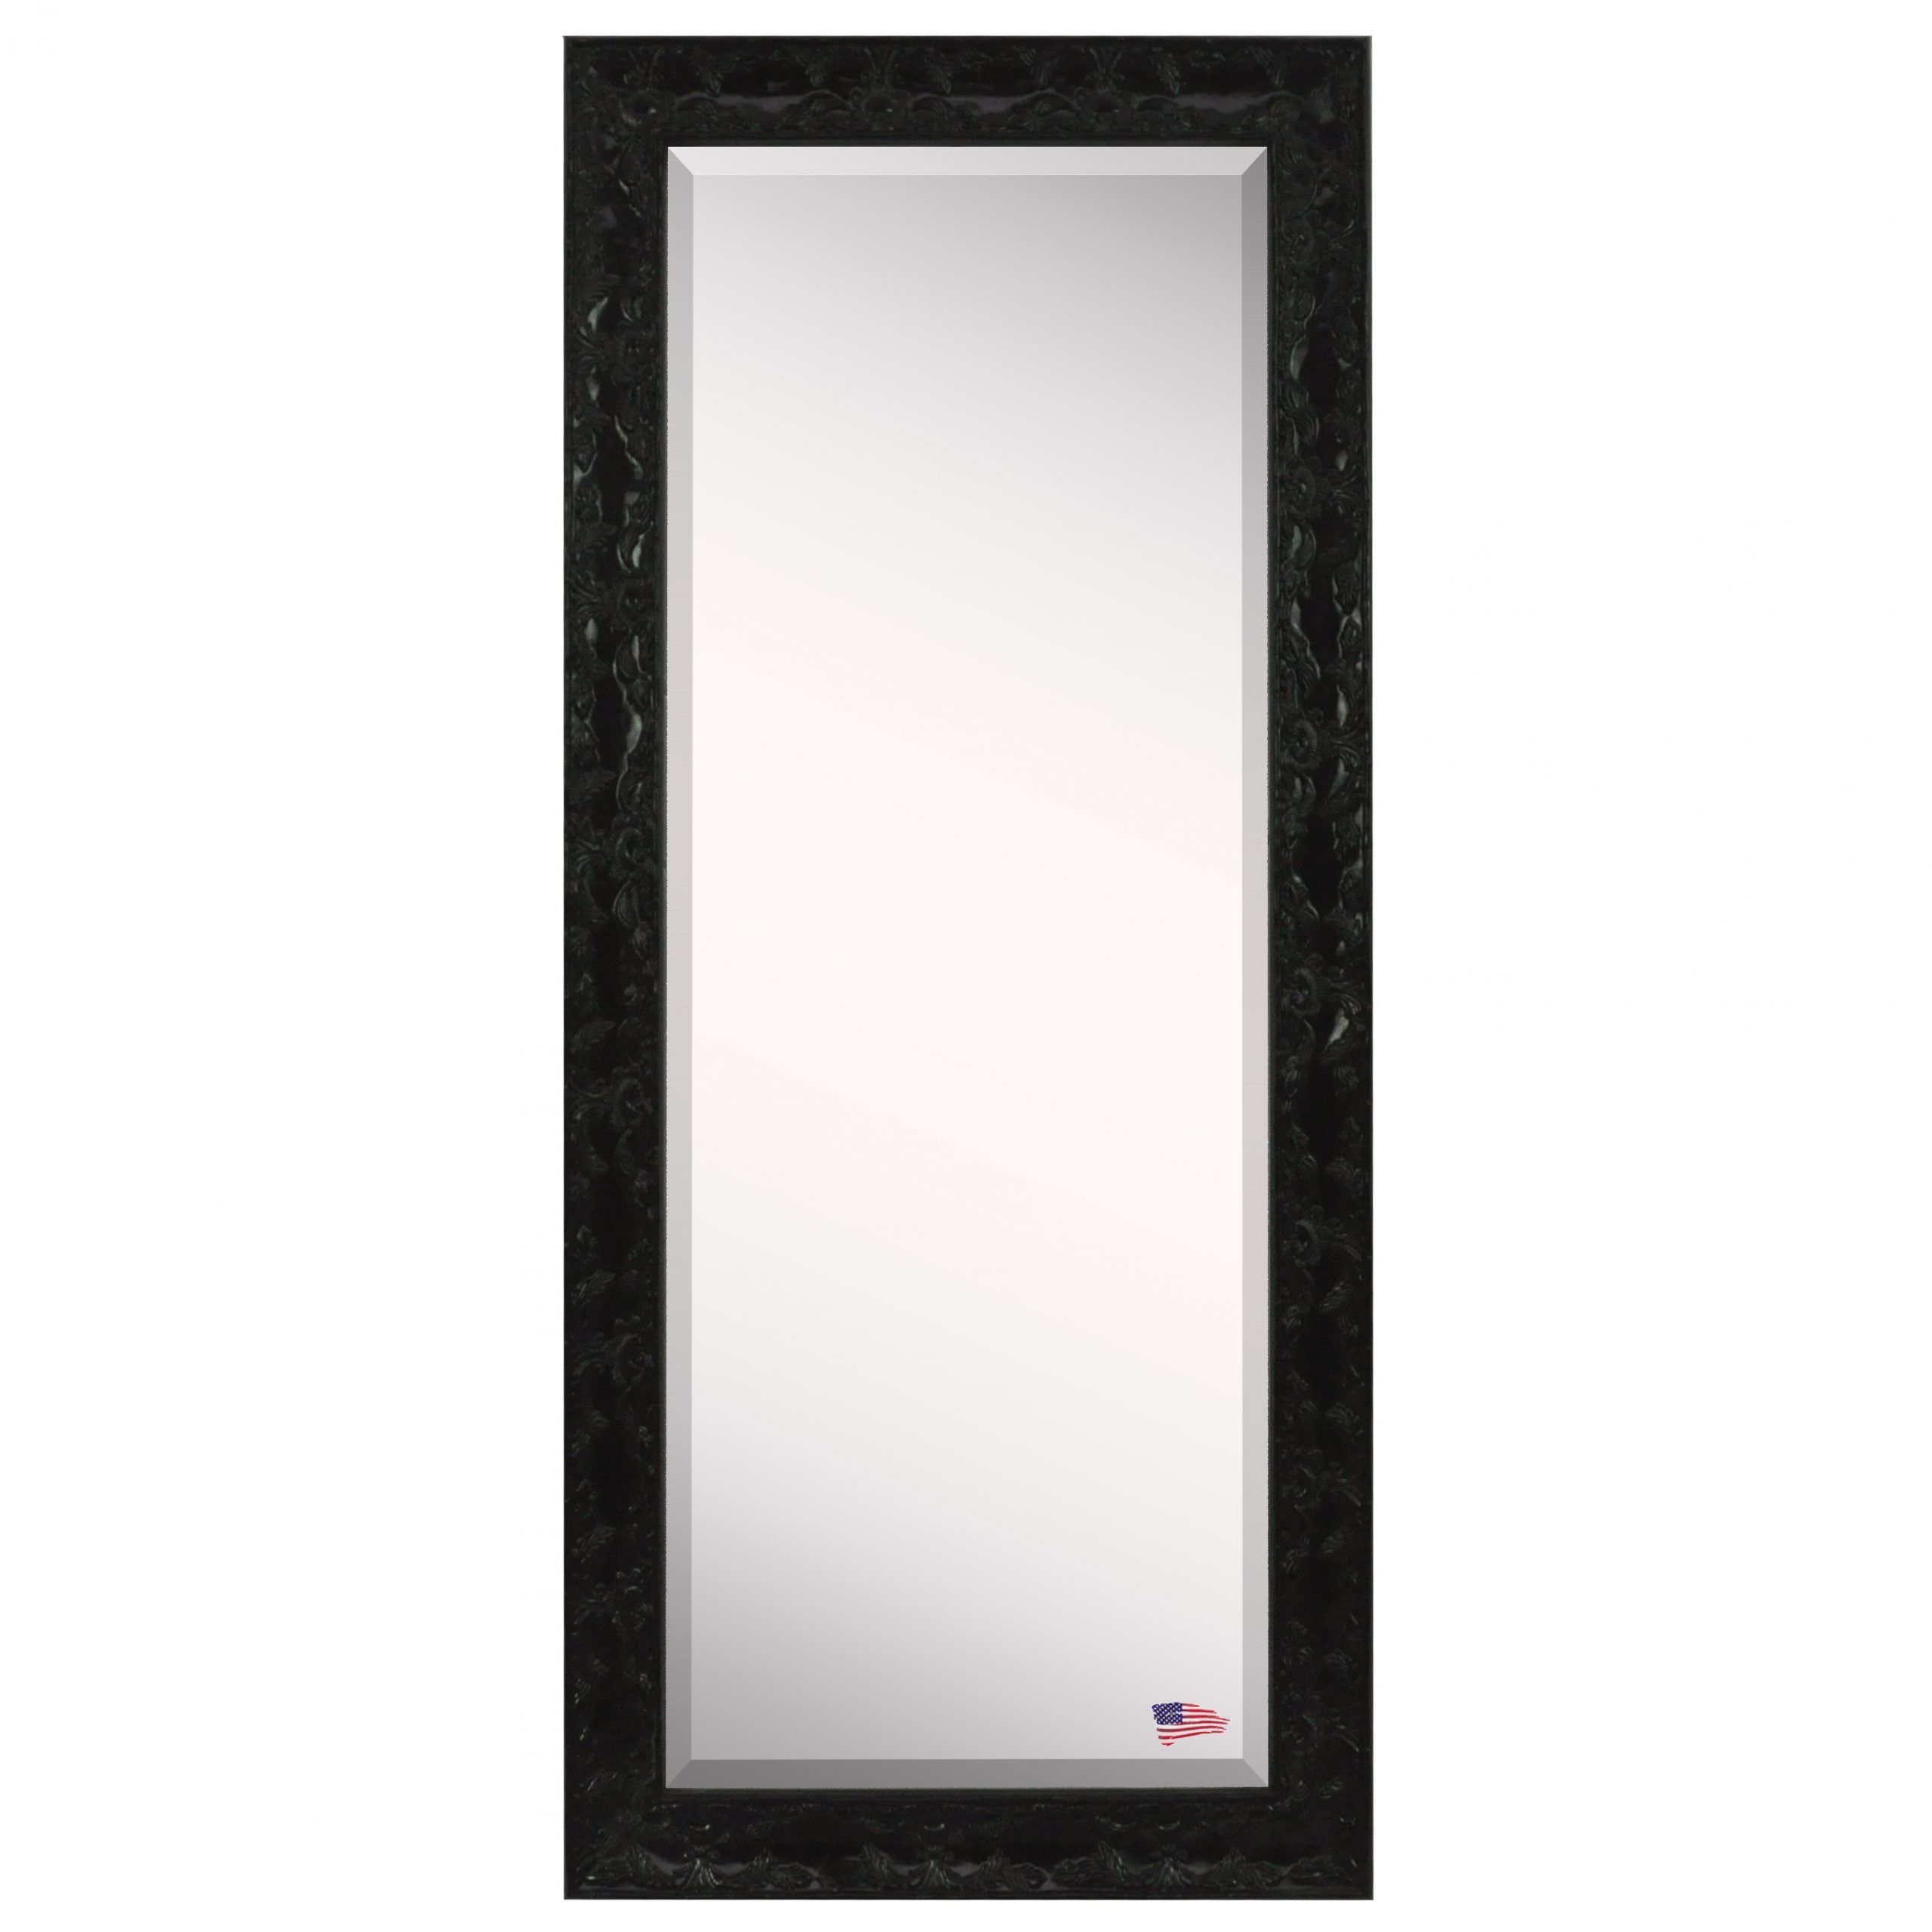 Rosalind Wheeler Black Rectangle Wall Mirror | Wayfair With Black Beaded Rectangular Wall Mirrors (View 15 of 15)